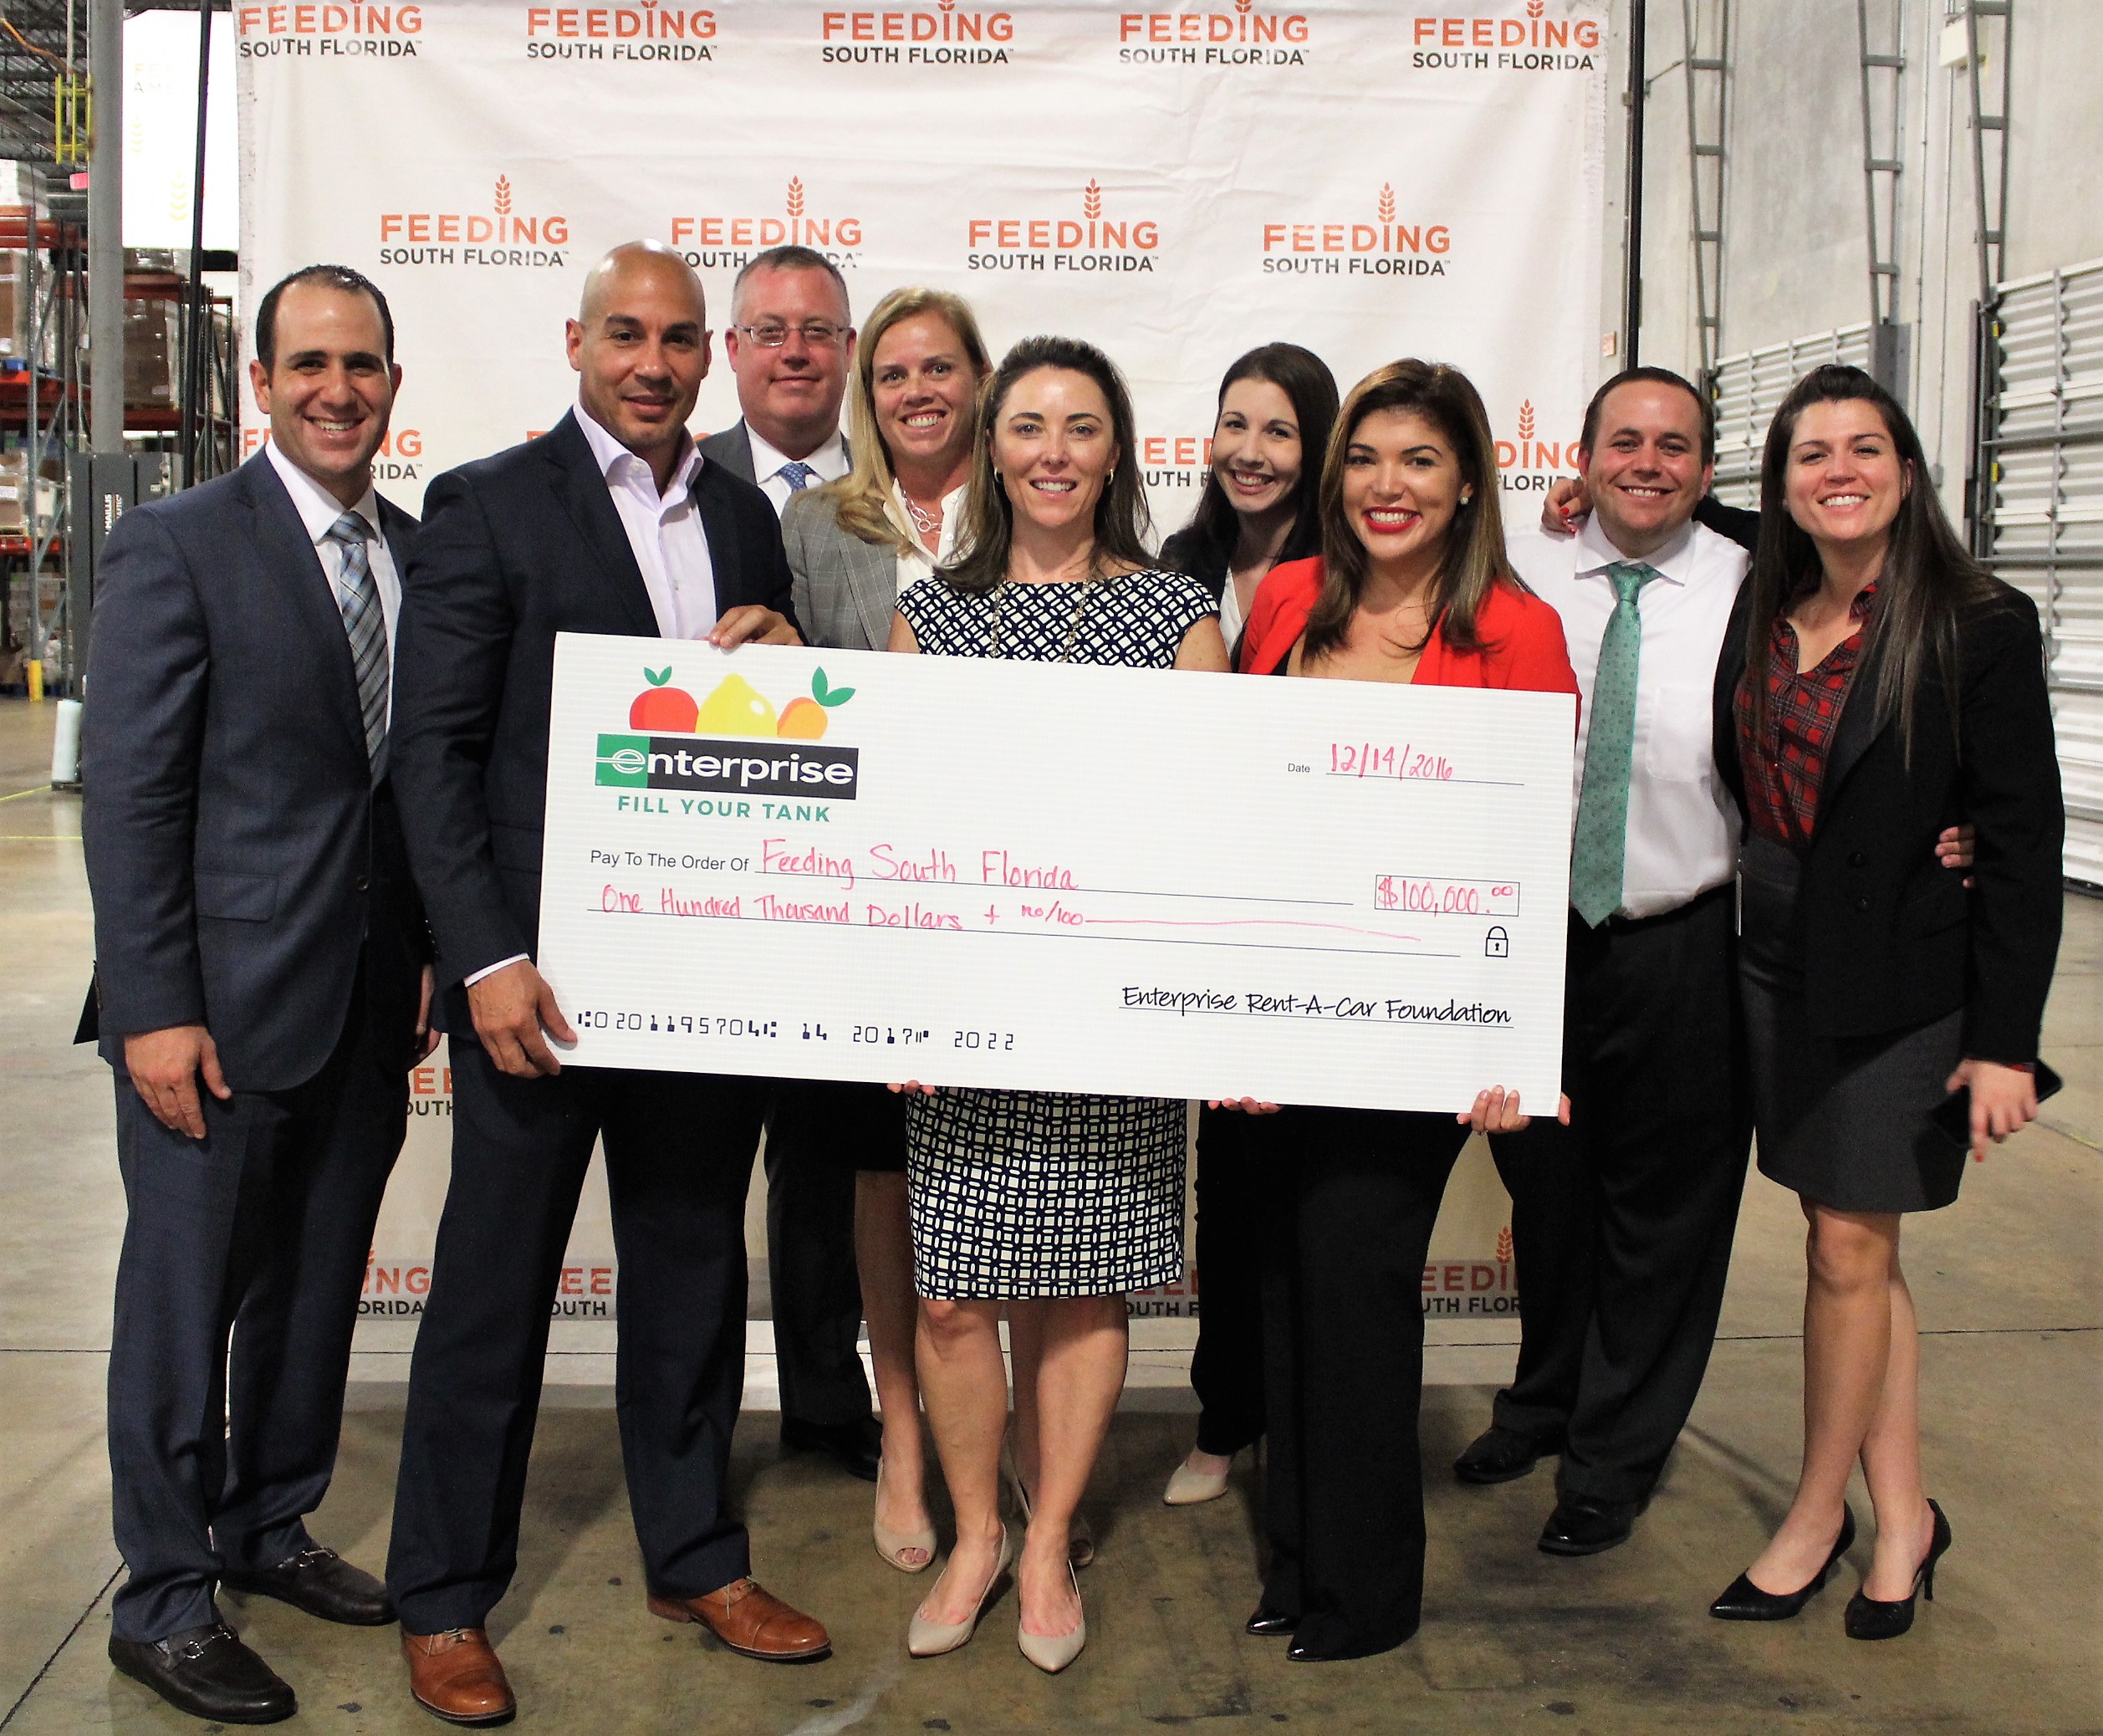 Enterprise Rent-A-Car Foundation Donates $100,000 to Feeding South Florida®